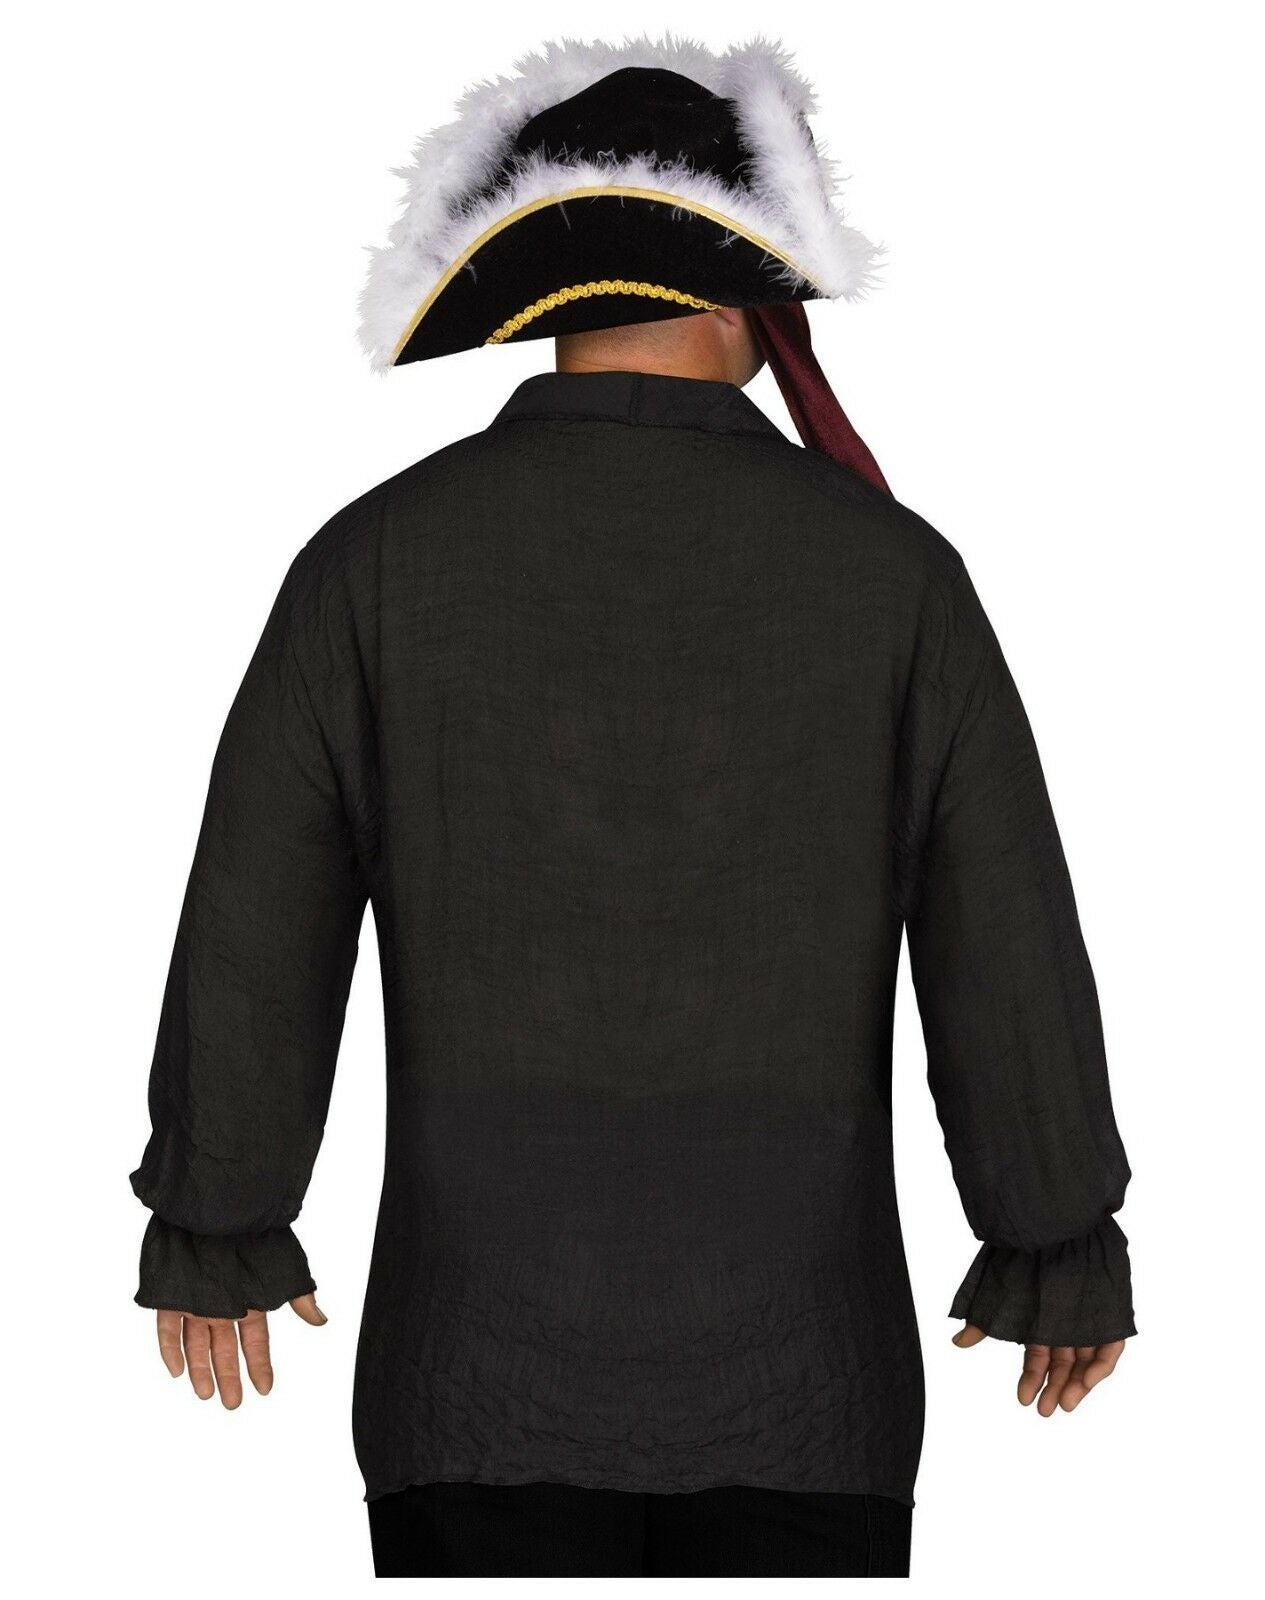 Swashbuckler Pirate Vampire Shirt Adult Plus Size Men Costume Accessory